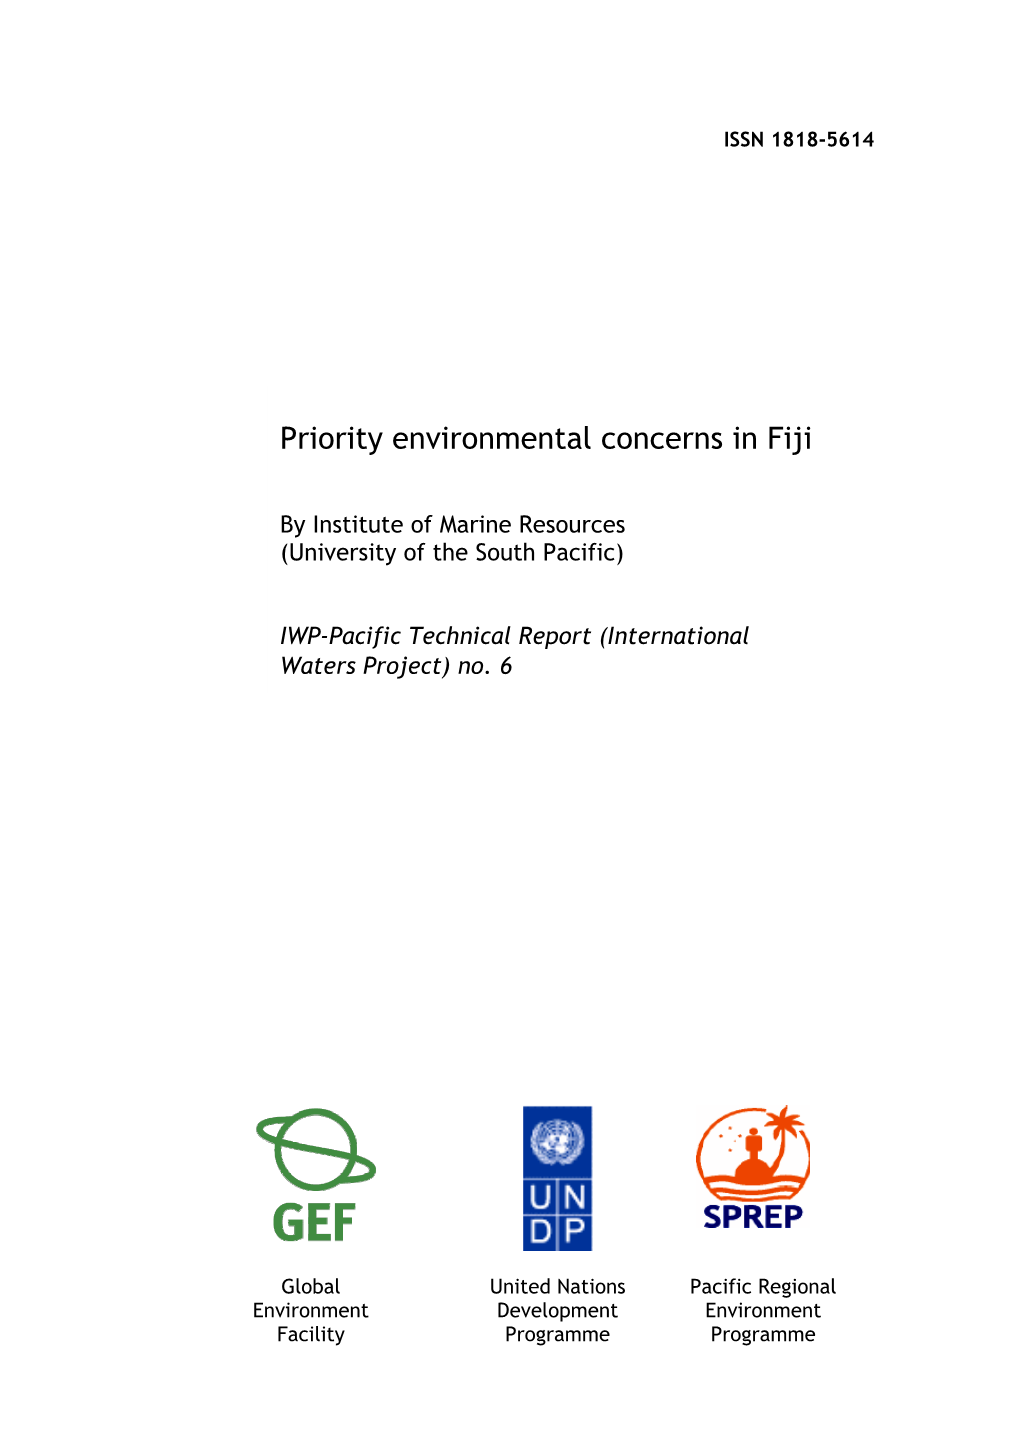 Priority Environmental Concerns in Fiji